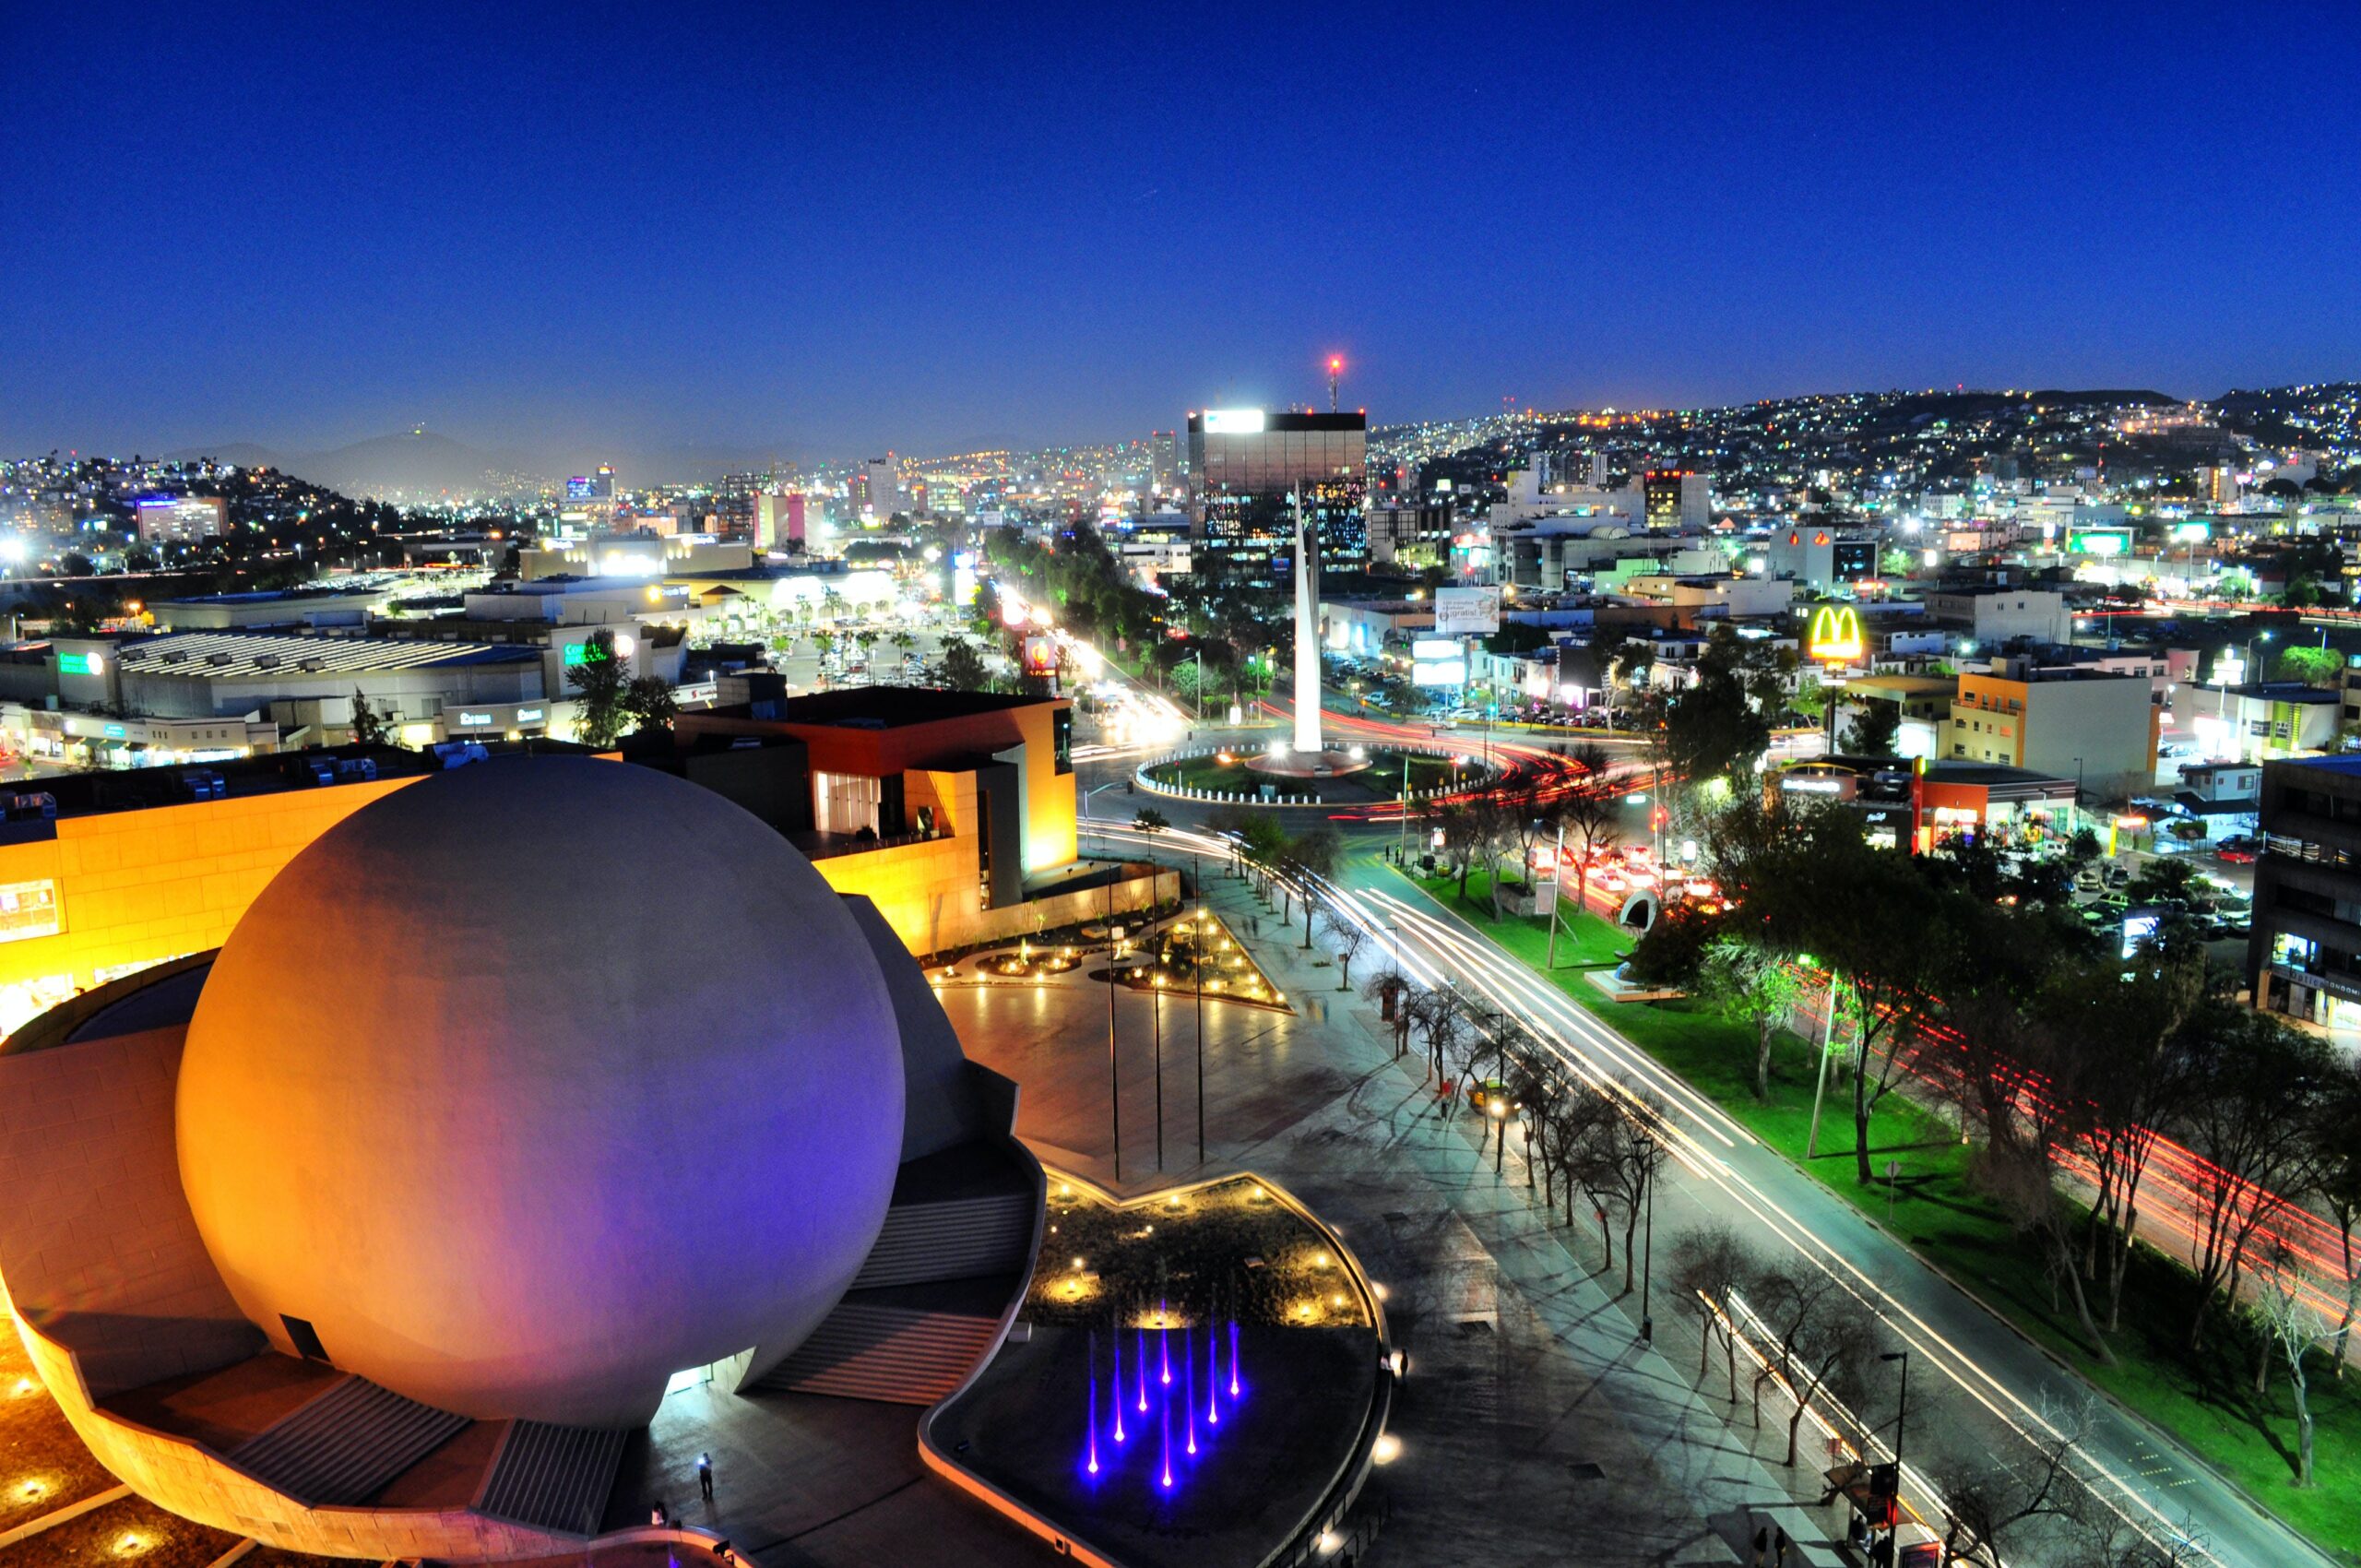 Tijuana with a night view, illuminated city.